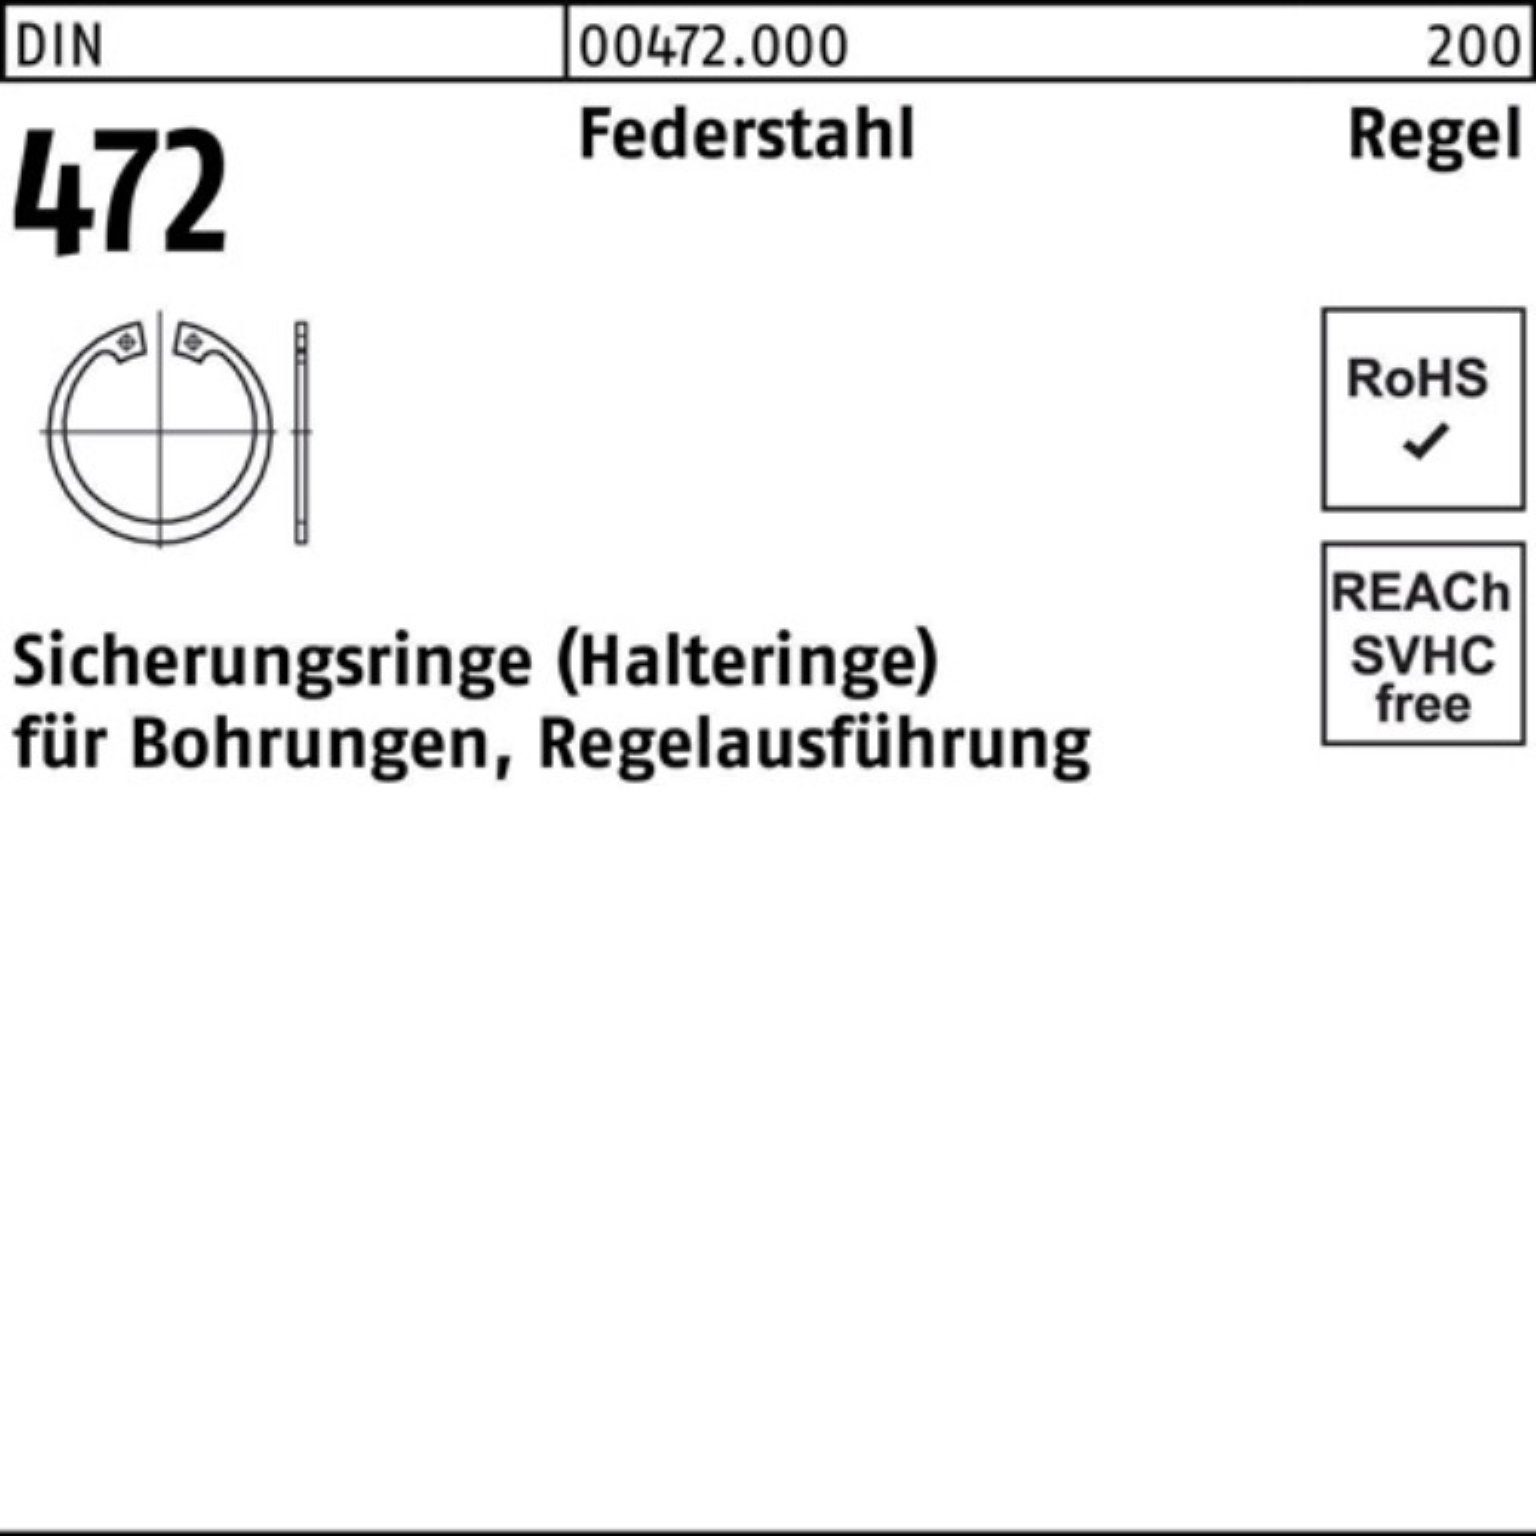 145x Stüc 1 Sicherungsring 472 Reyher Sicherungsring Federstahl Pack DIN Regelausf. 100er 4